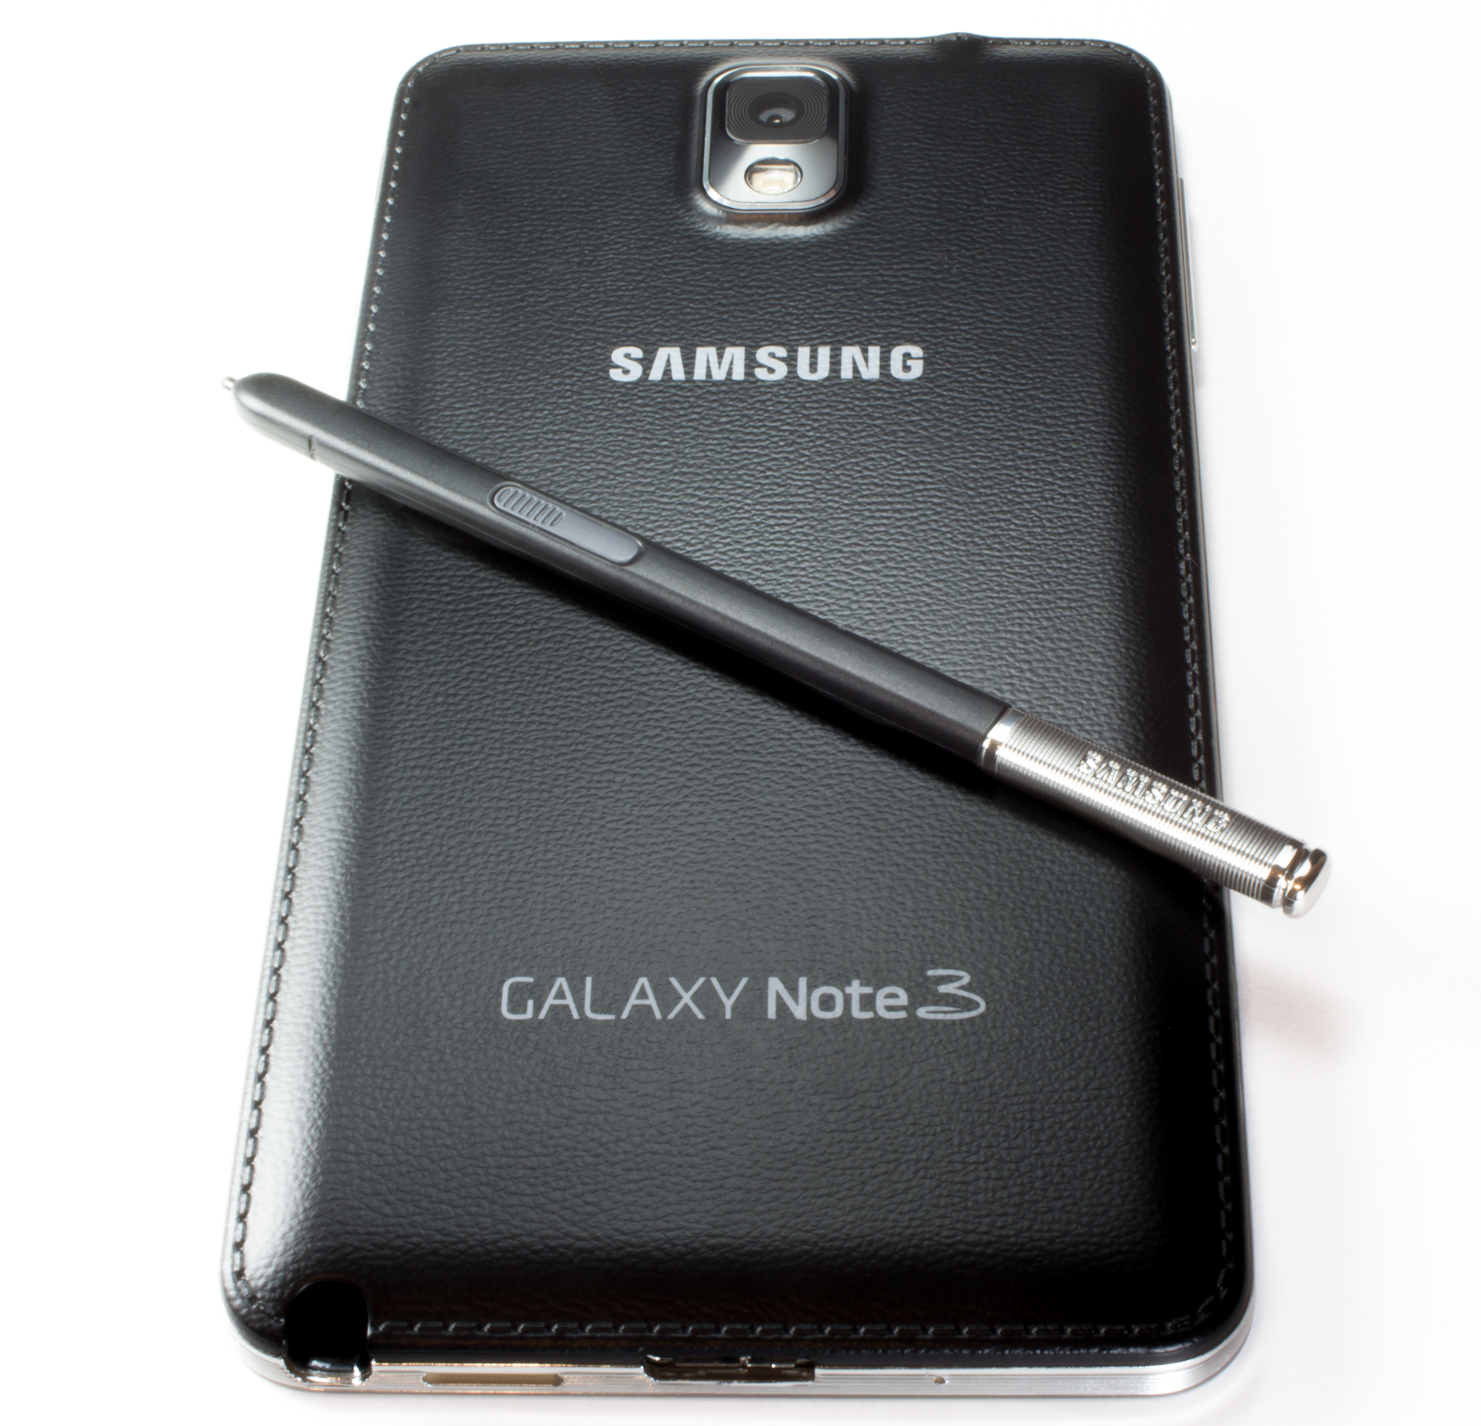 Galaxy note обзор. Galaxy s3 Note. Самсунг ноут 3. Самсунг галакси Note 3s. Samsung Galaxy Note 3 стилус.